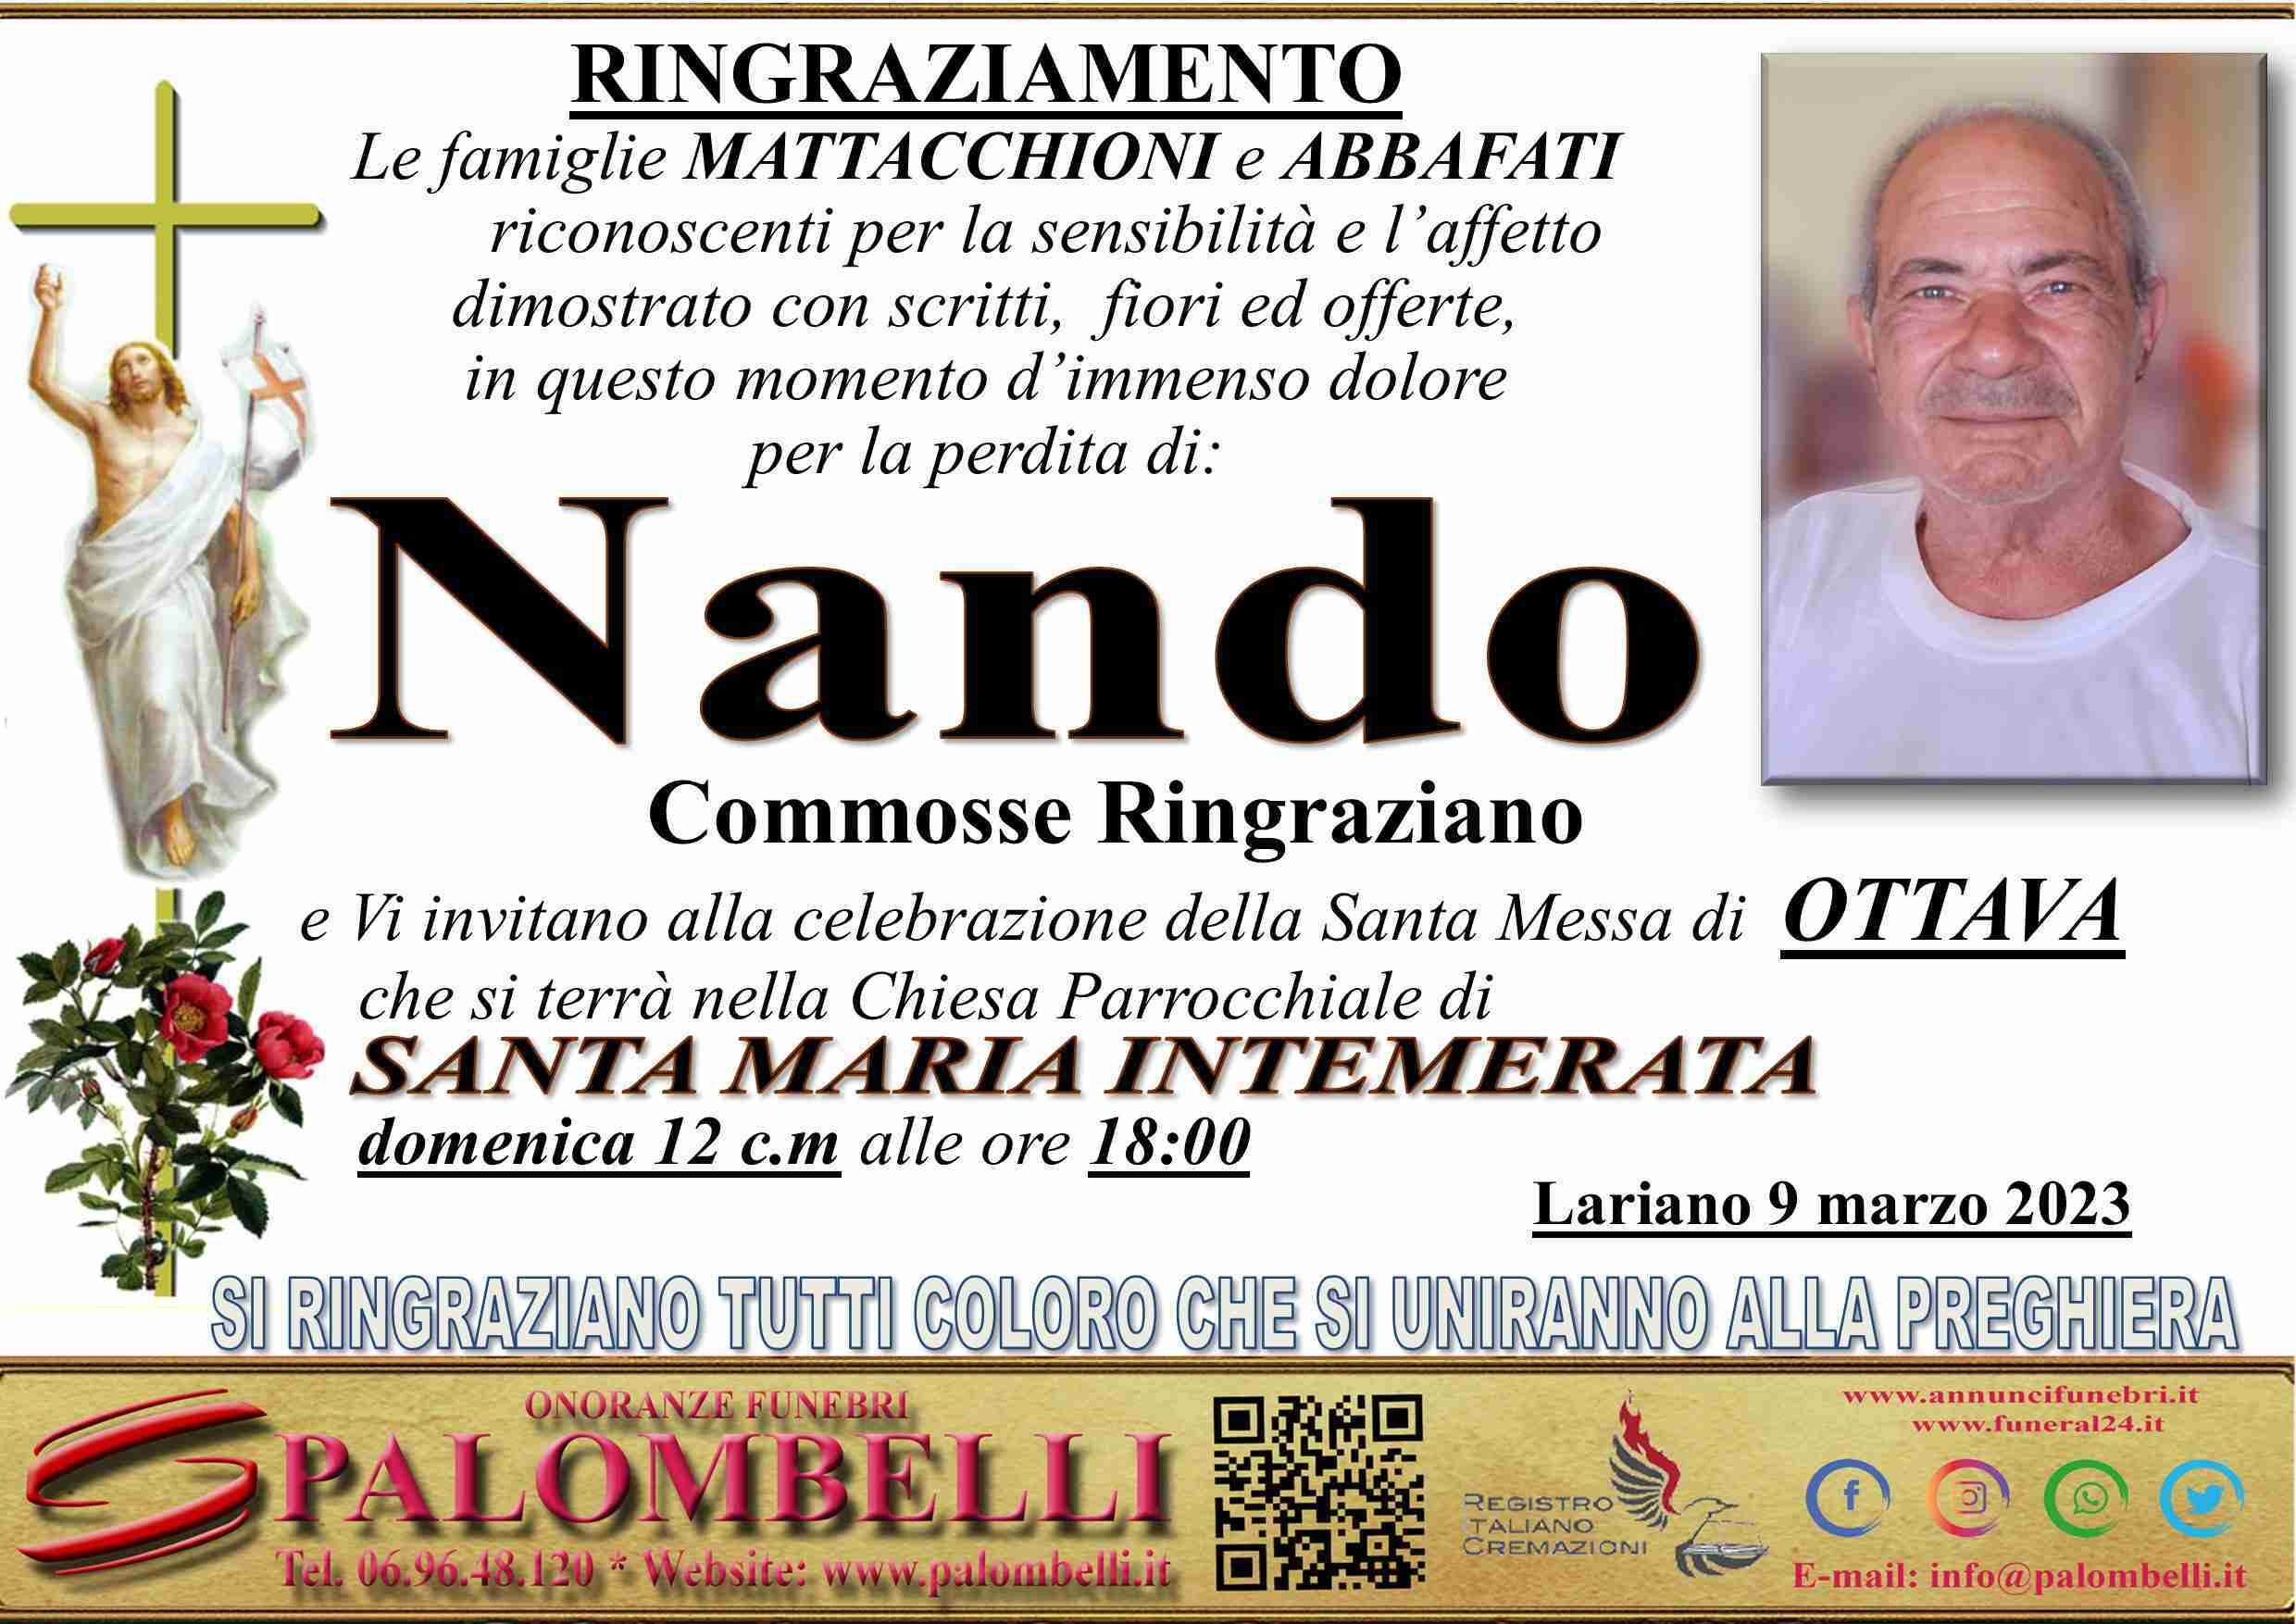 Nando Mattacchioni